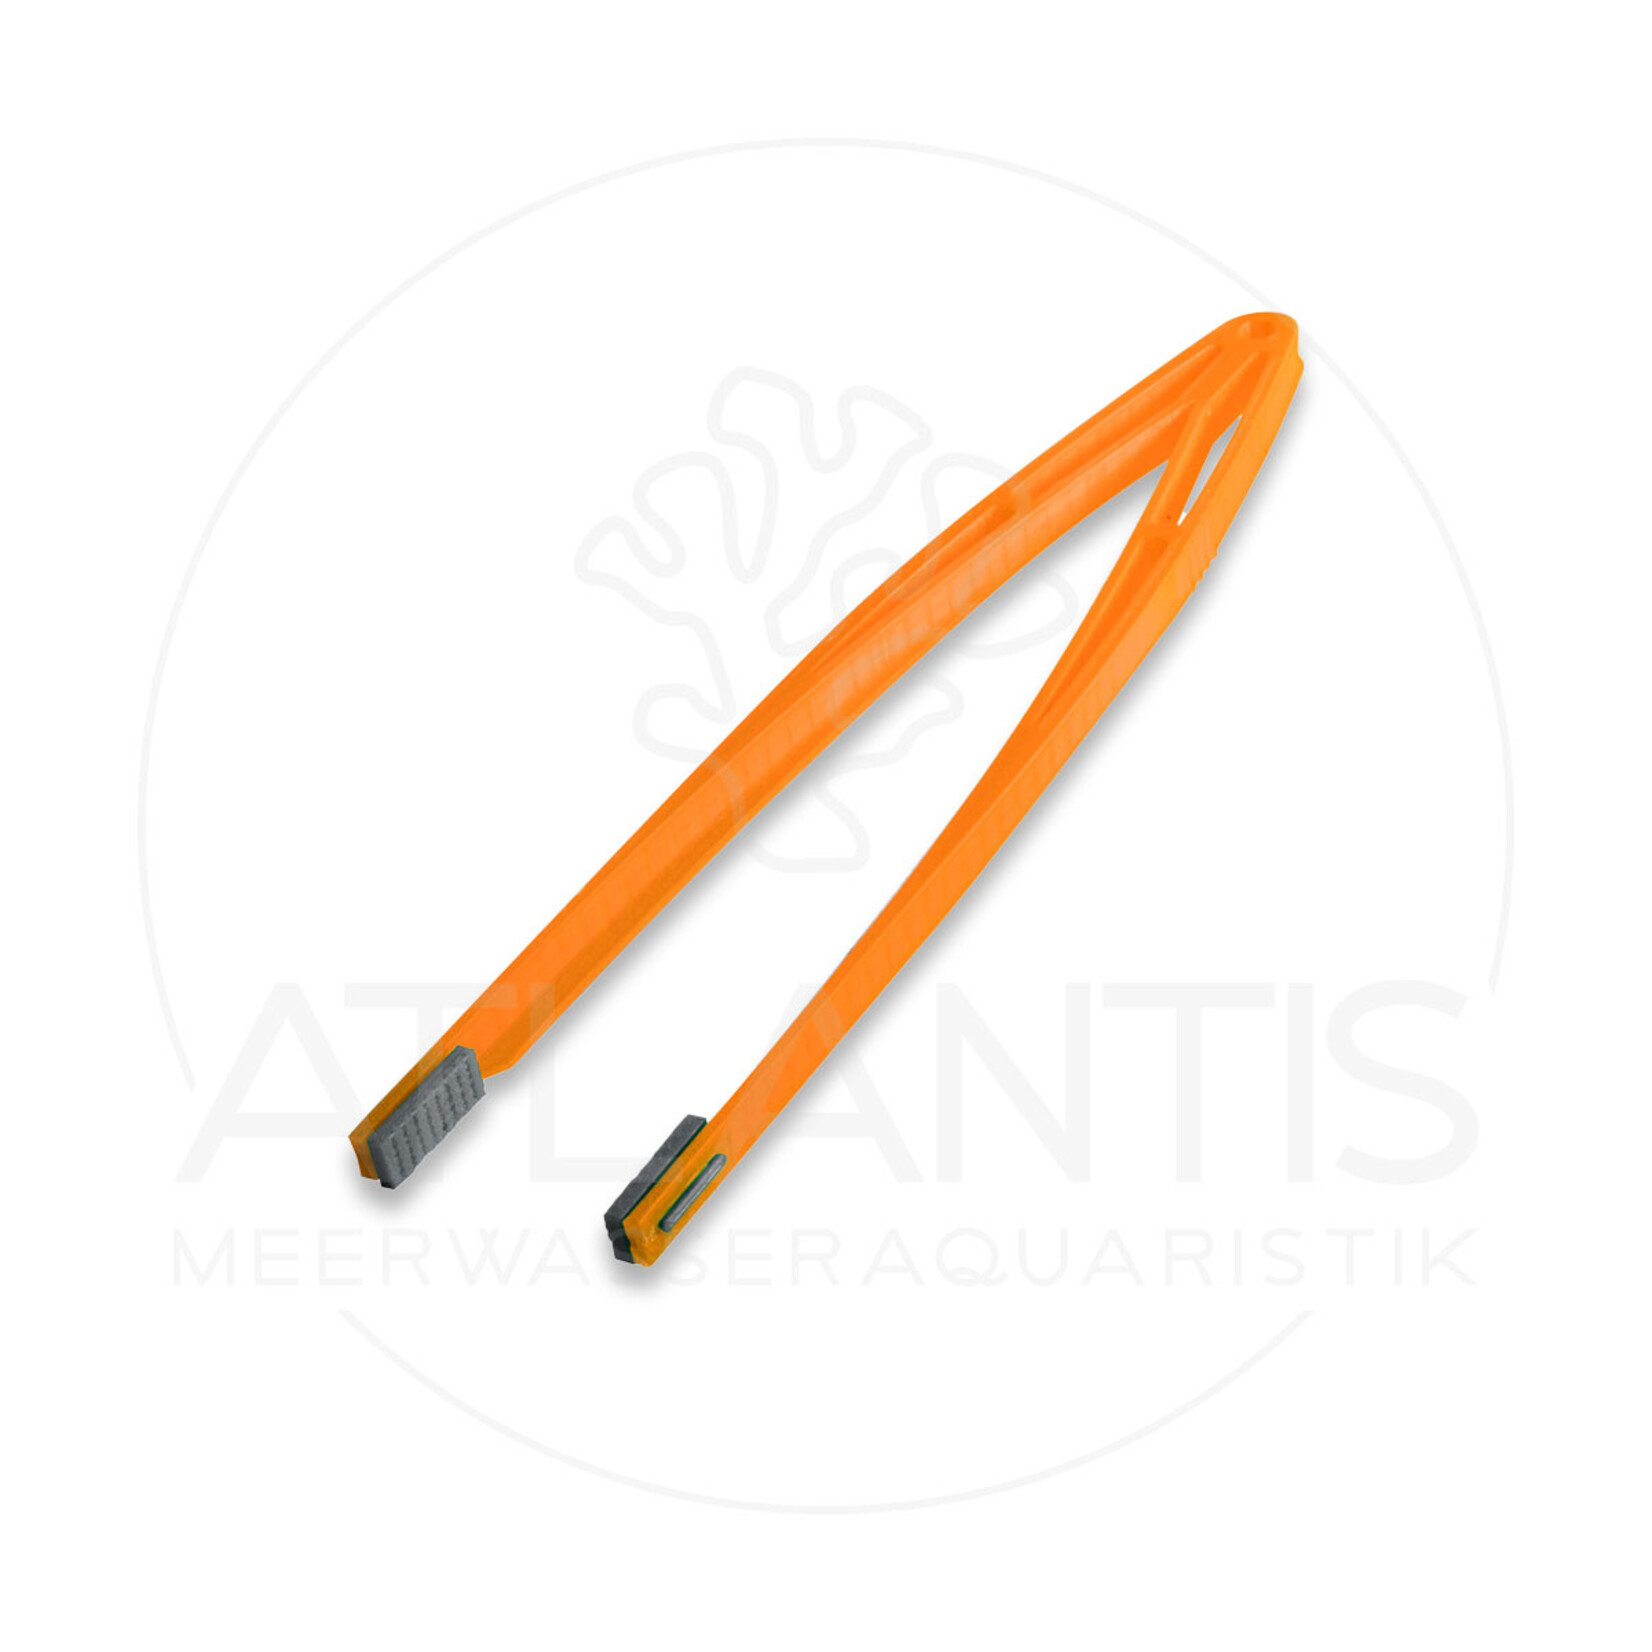 VCA Tweezers - Sunset Orange - 28 cm